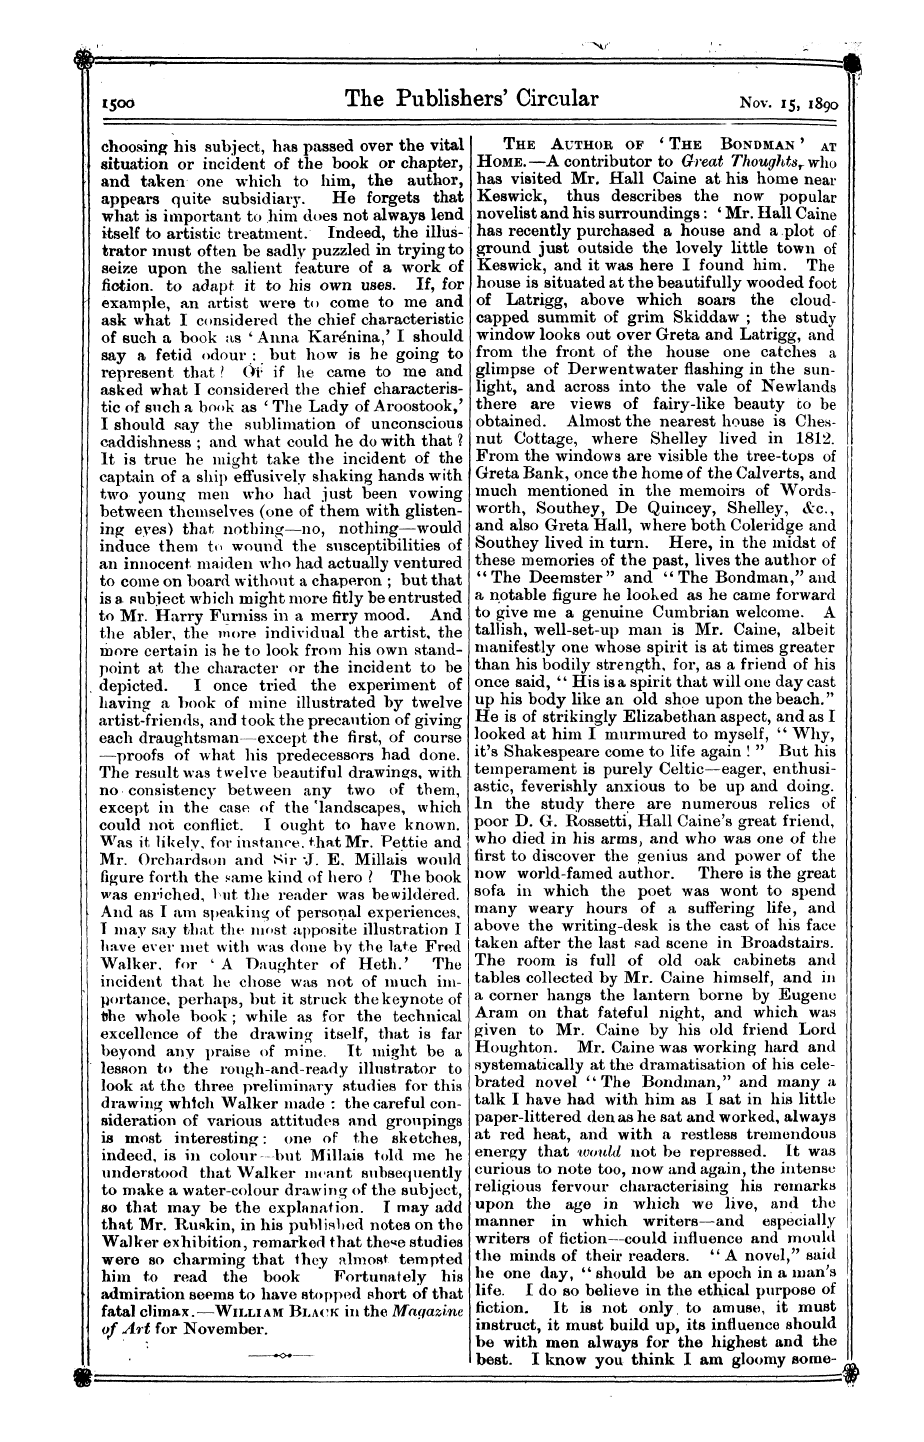 Publishers’ Circular (1880-1890): jS F Y, 1st edition: 14